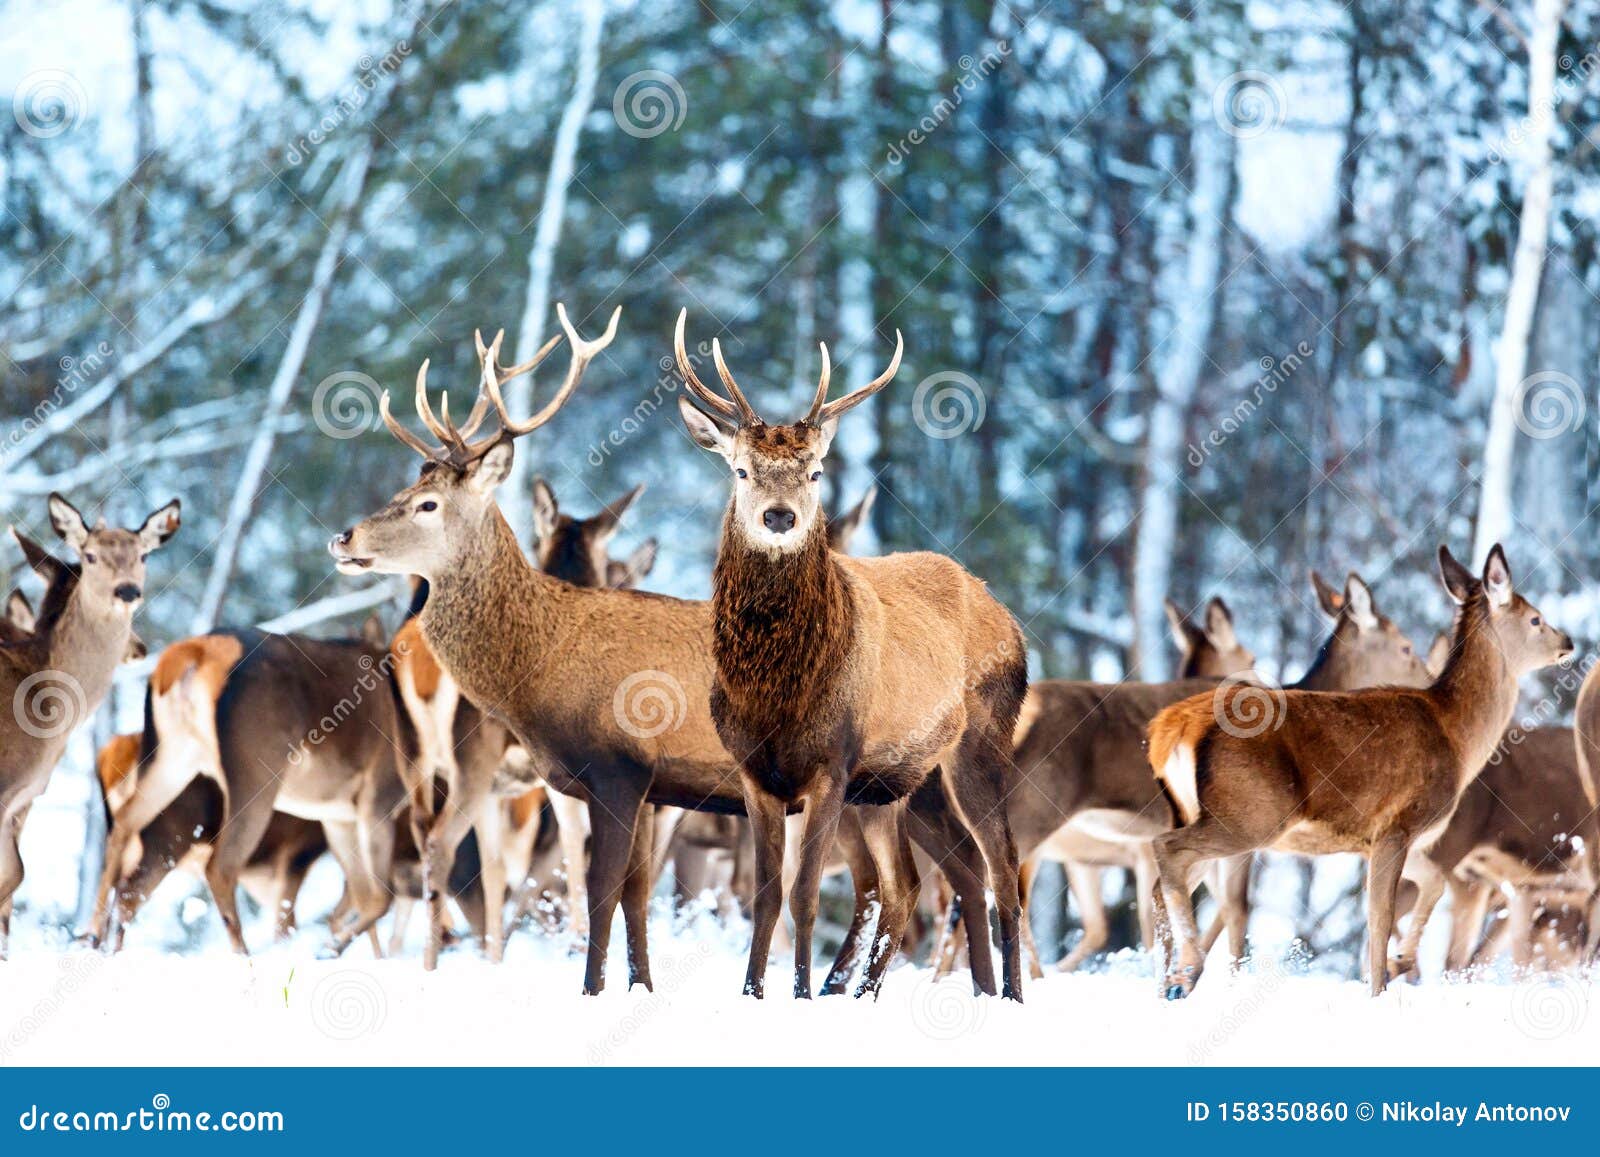 artistic winter christmas nature image. winter wildlife landscape with noble deers cervus elaphus. many deers in winter